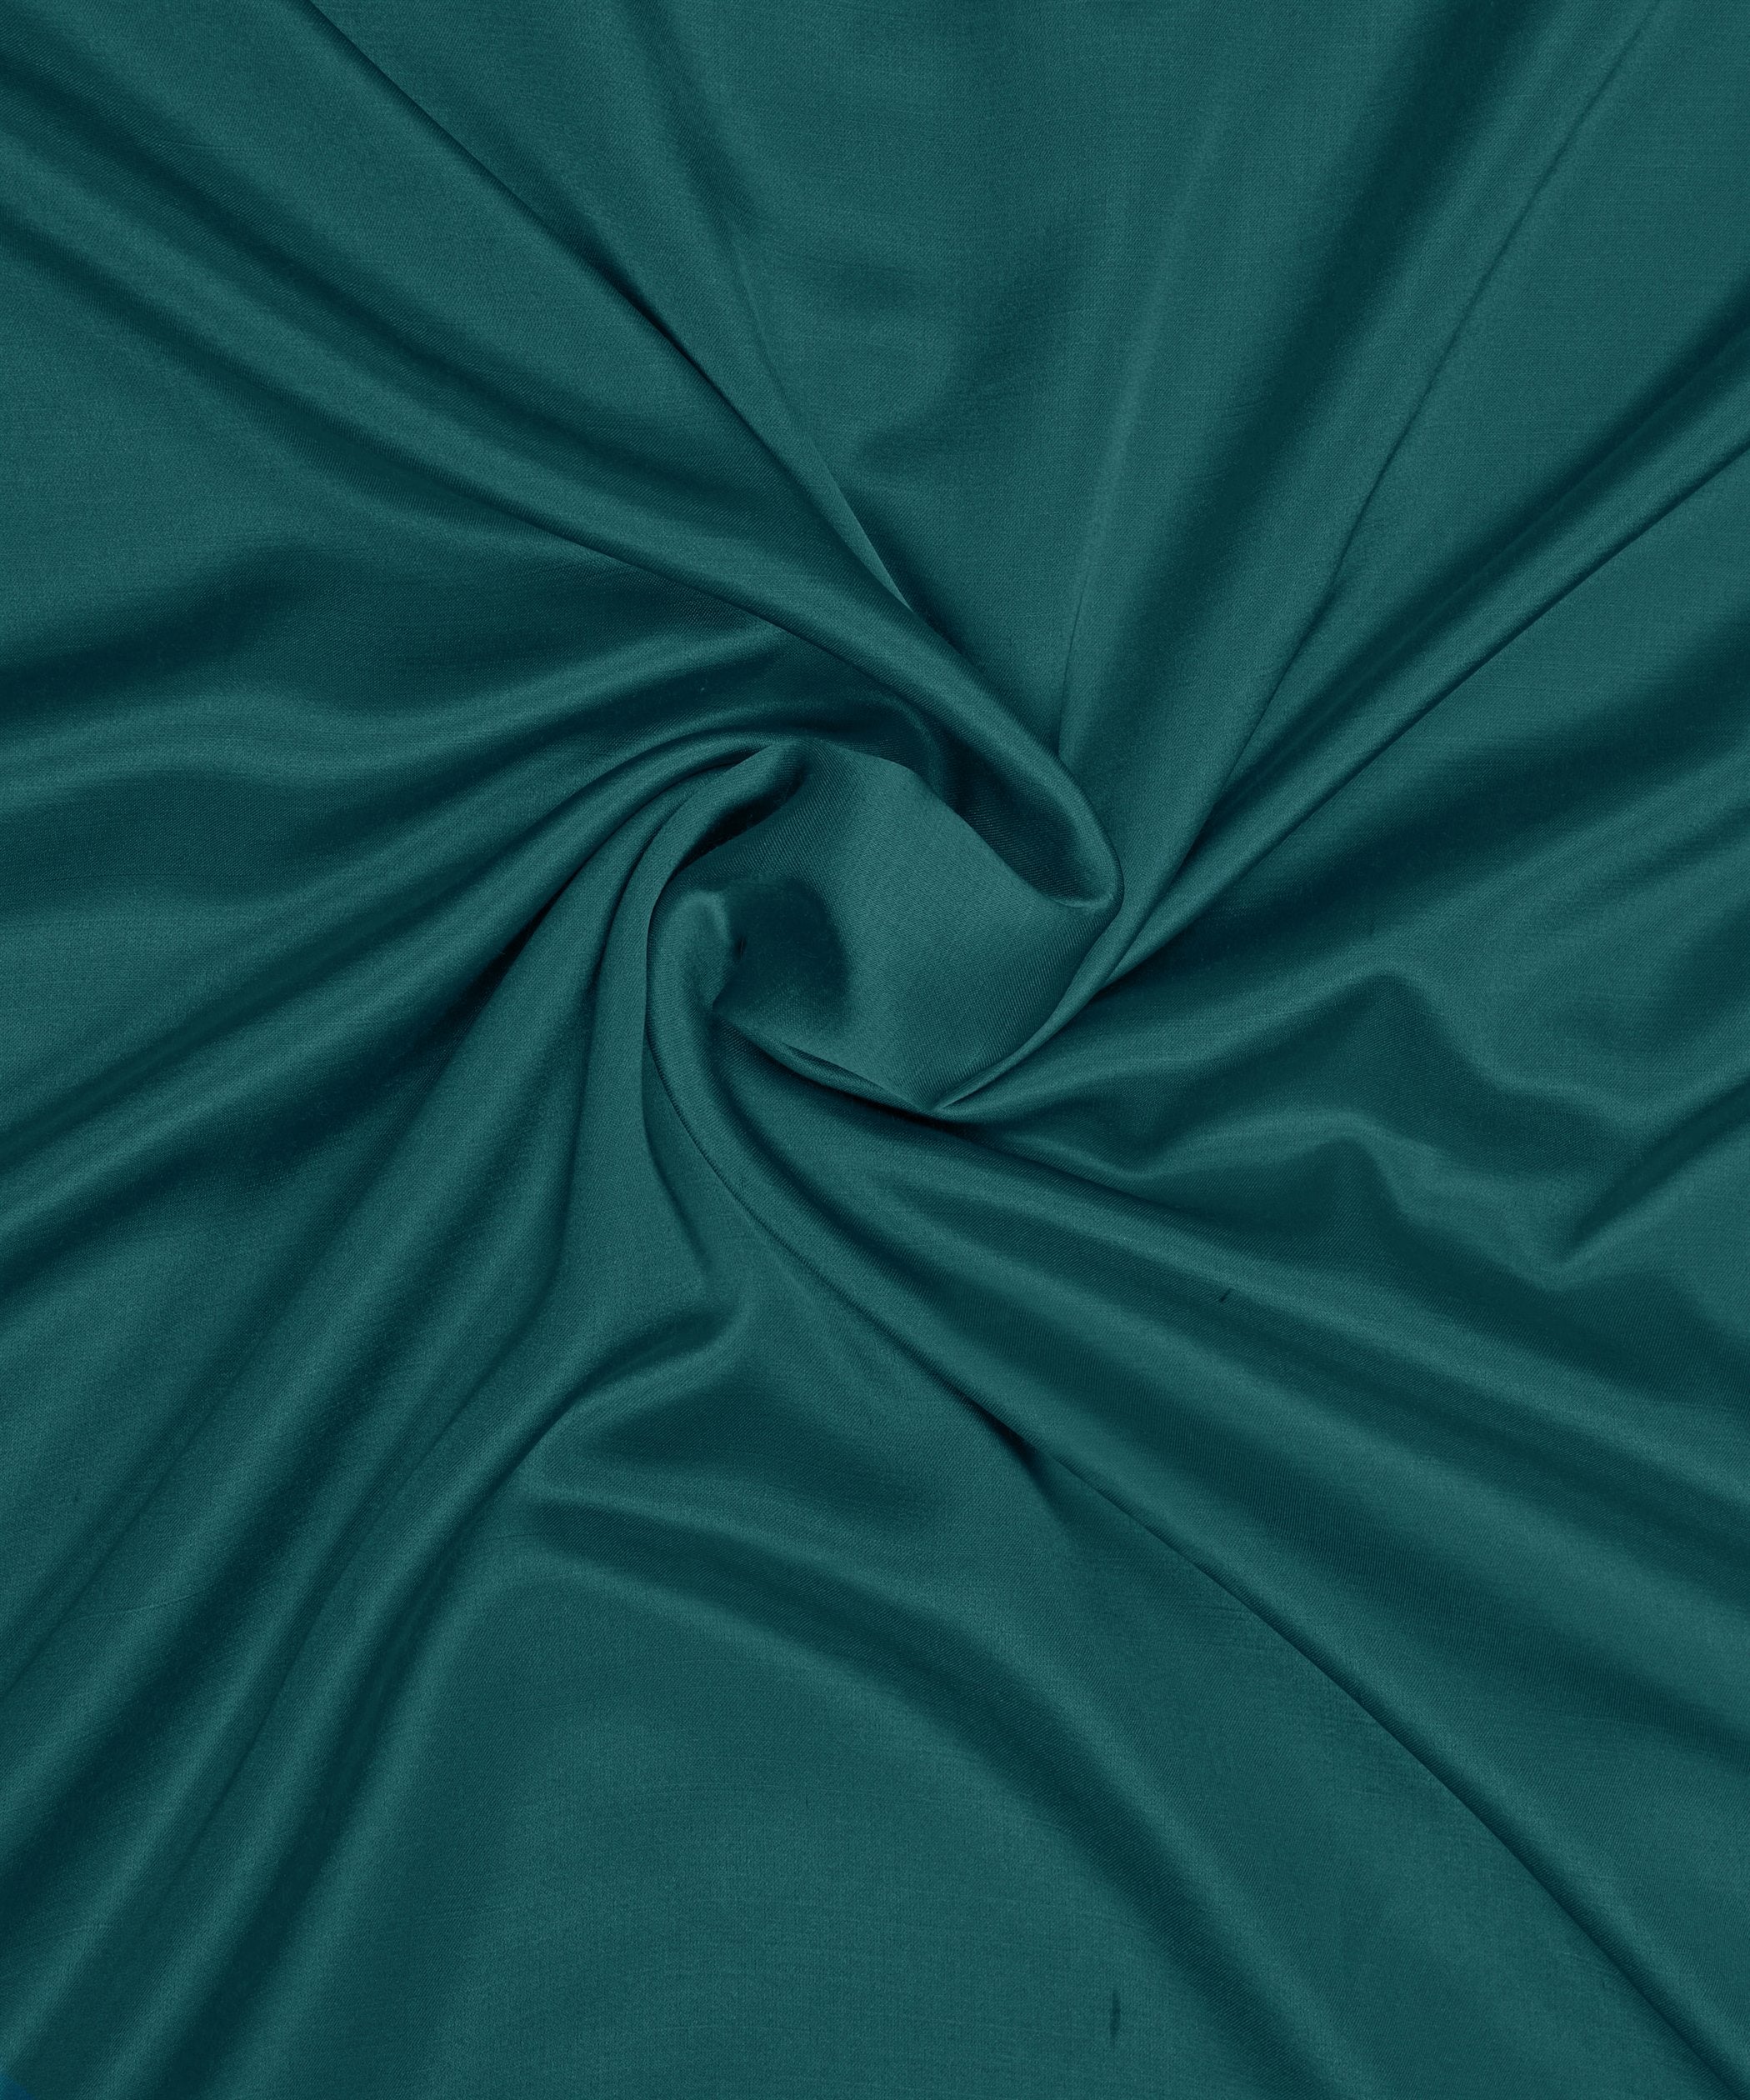 Pine Green Plain Dyed Modal Satin Fabric